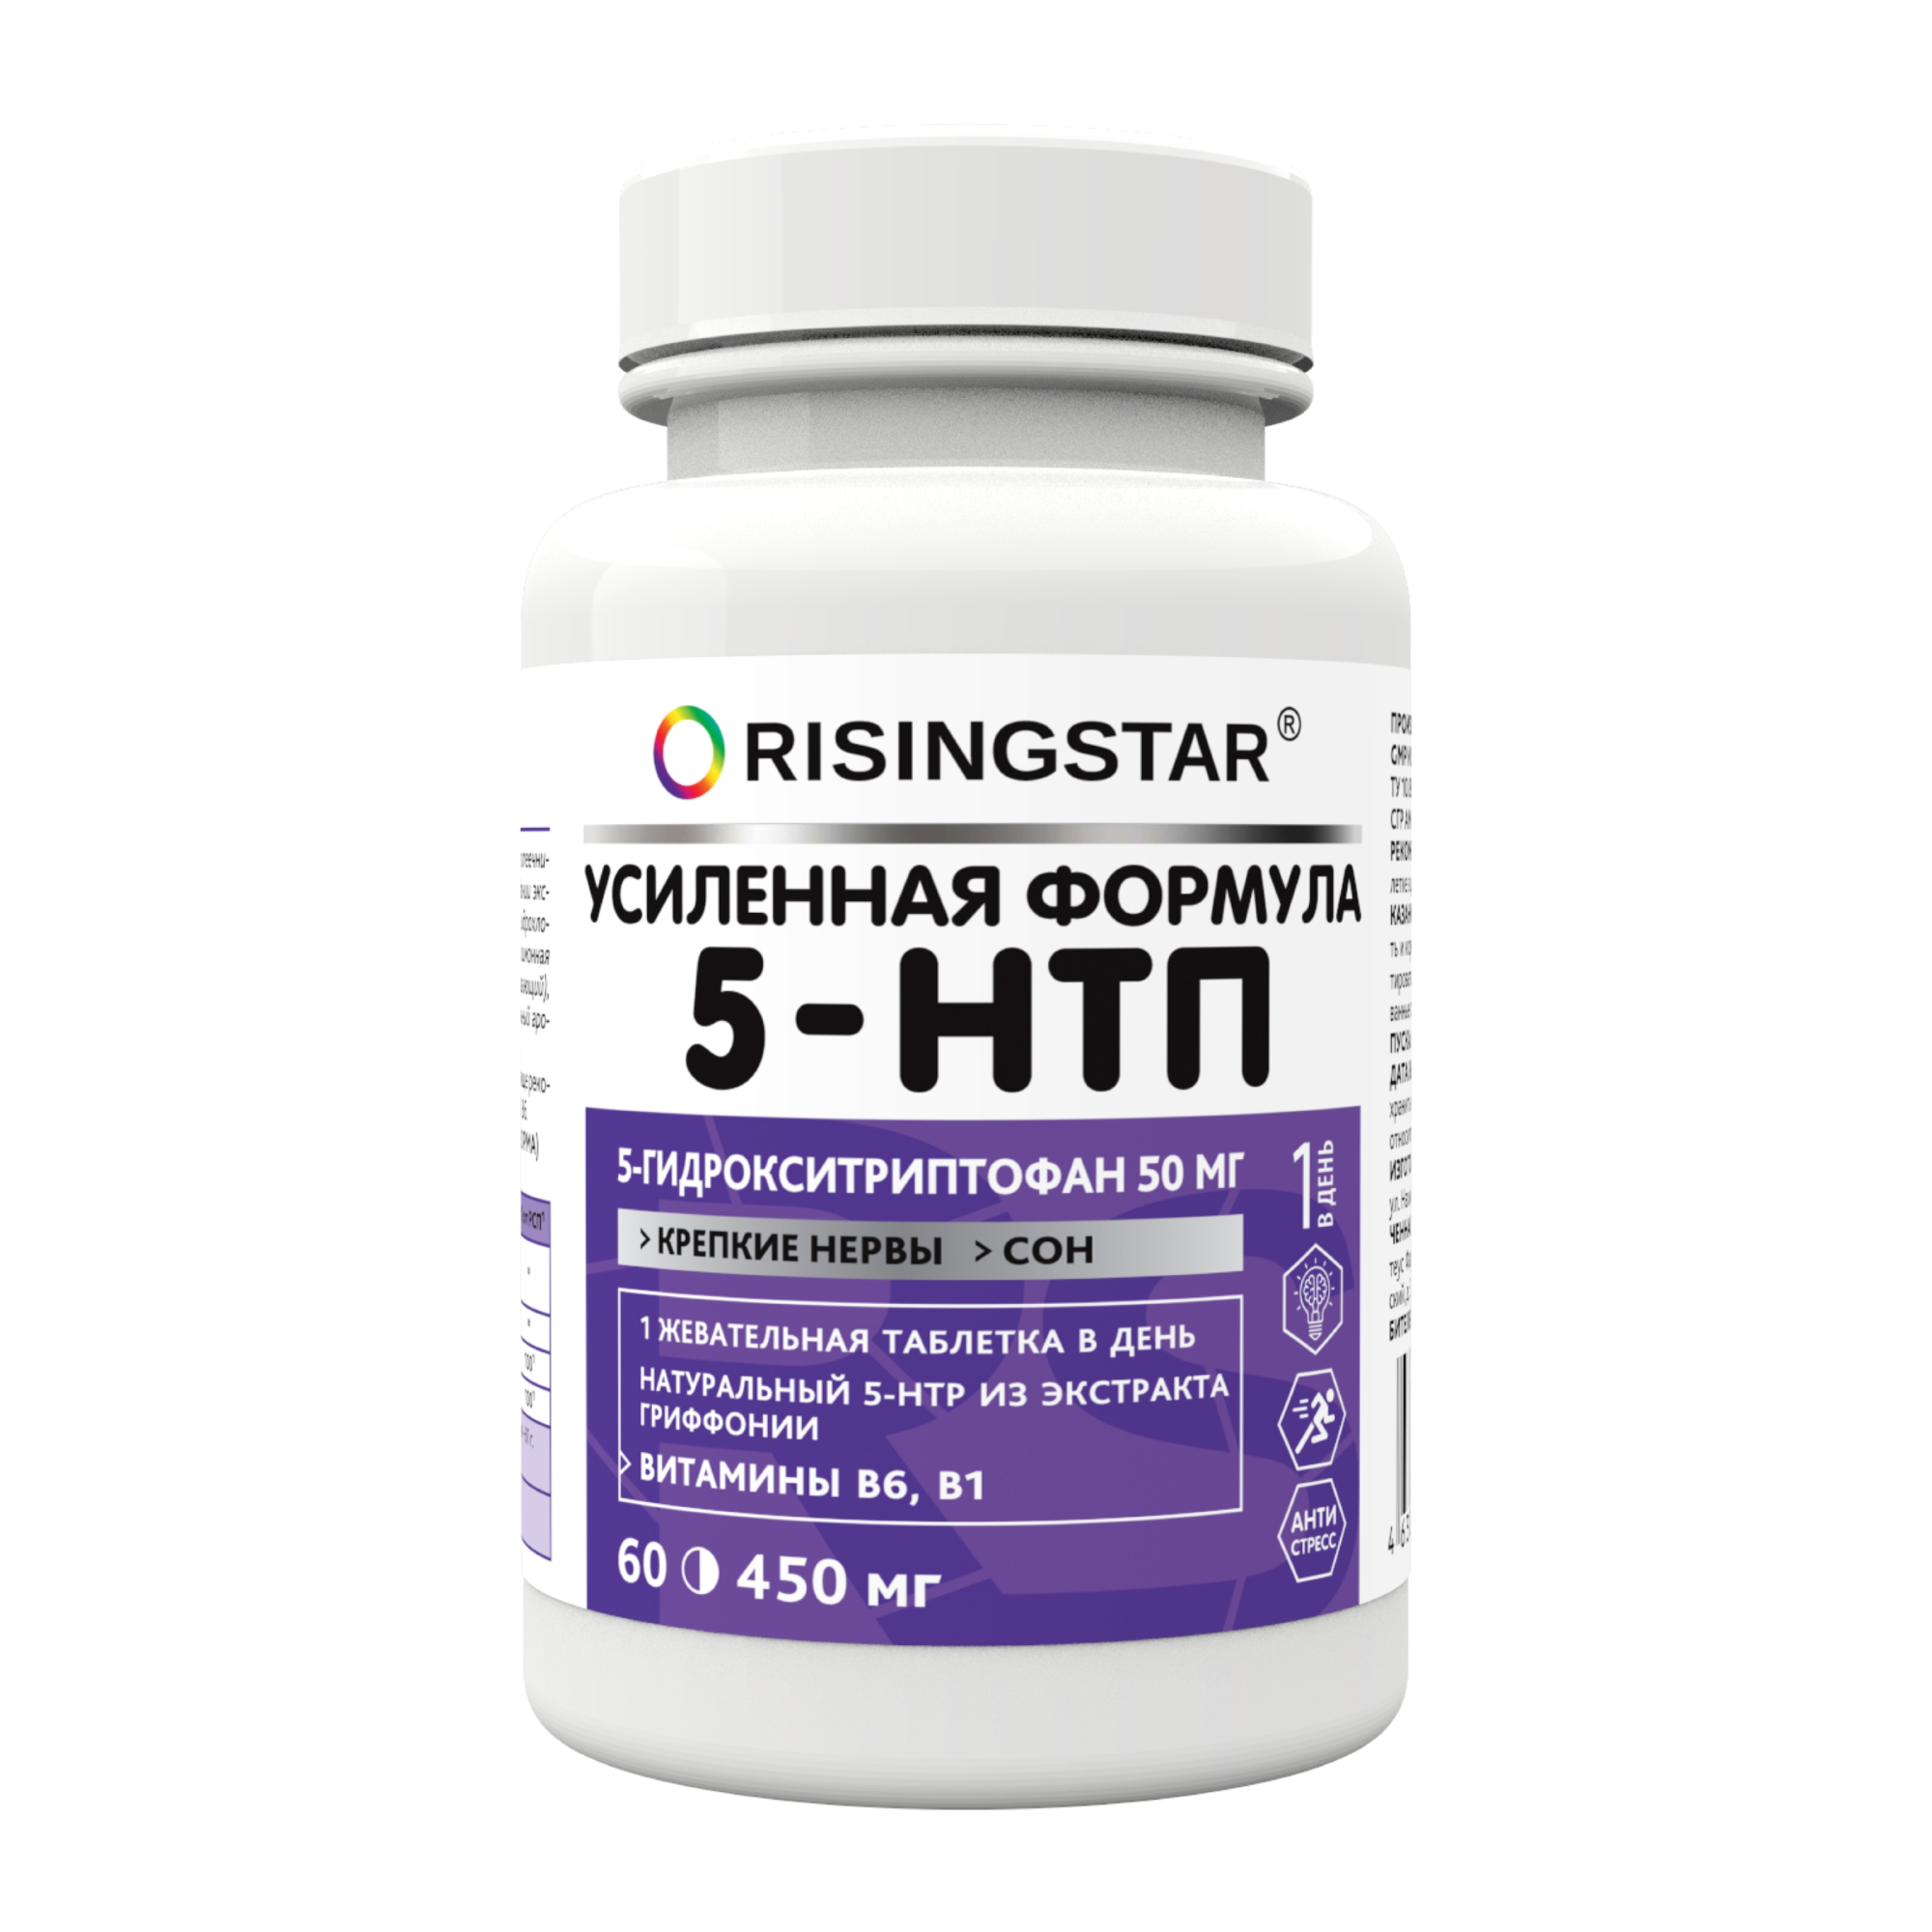 БАД Risingstar 5-htp альпиграс 60 таблеток, 60 г биологически активная добавка к пище risingstar 5 htp альпиграс 60 шт